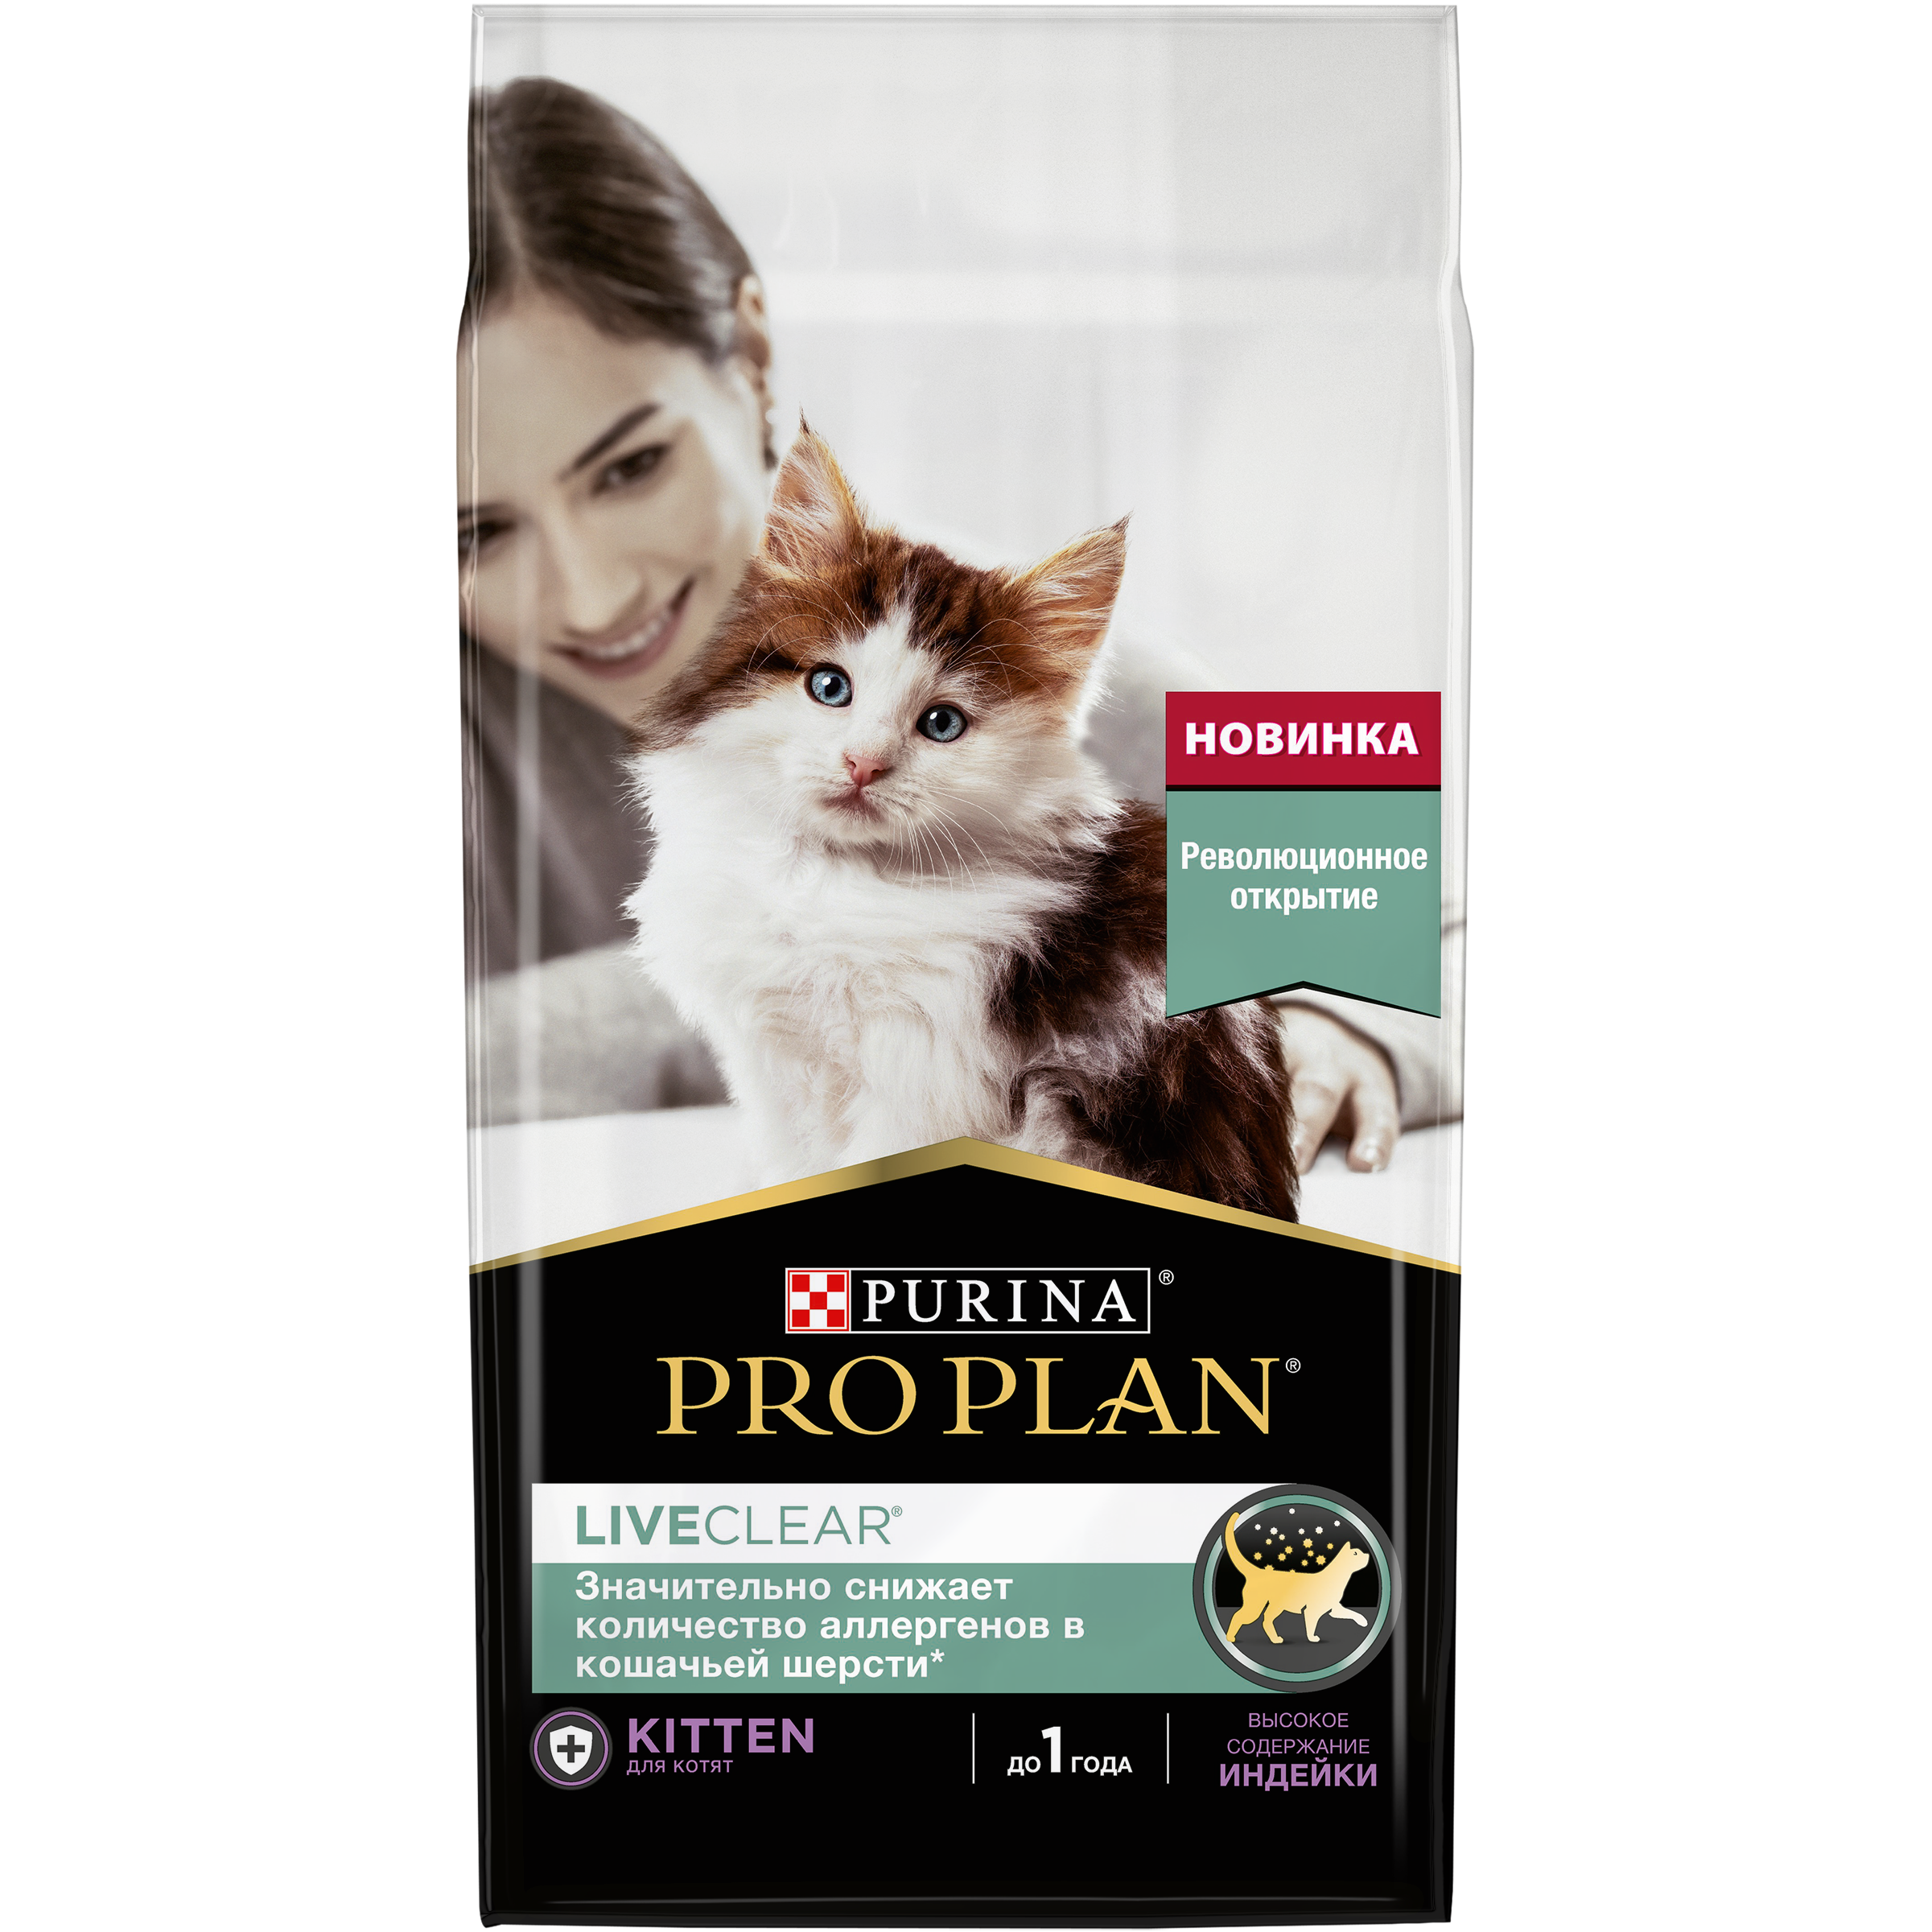 Сухой корм Pro Plan LiveСlear для котят до 1 года, с высоким содержанием индейки 